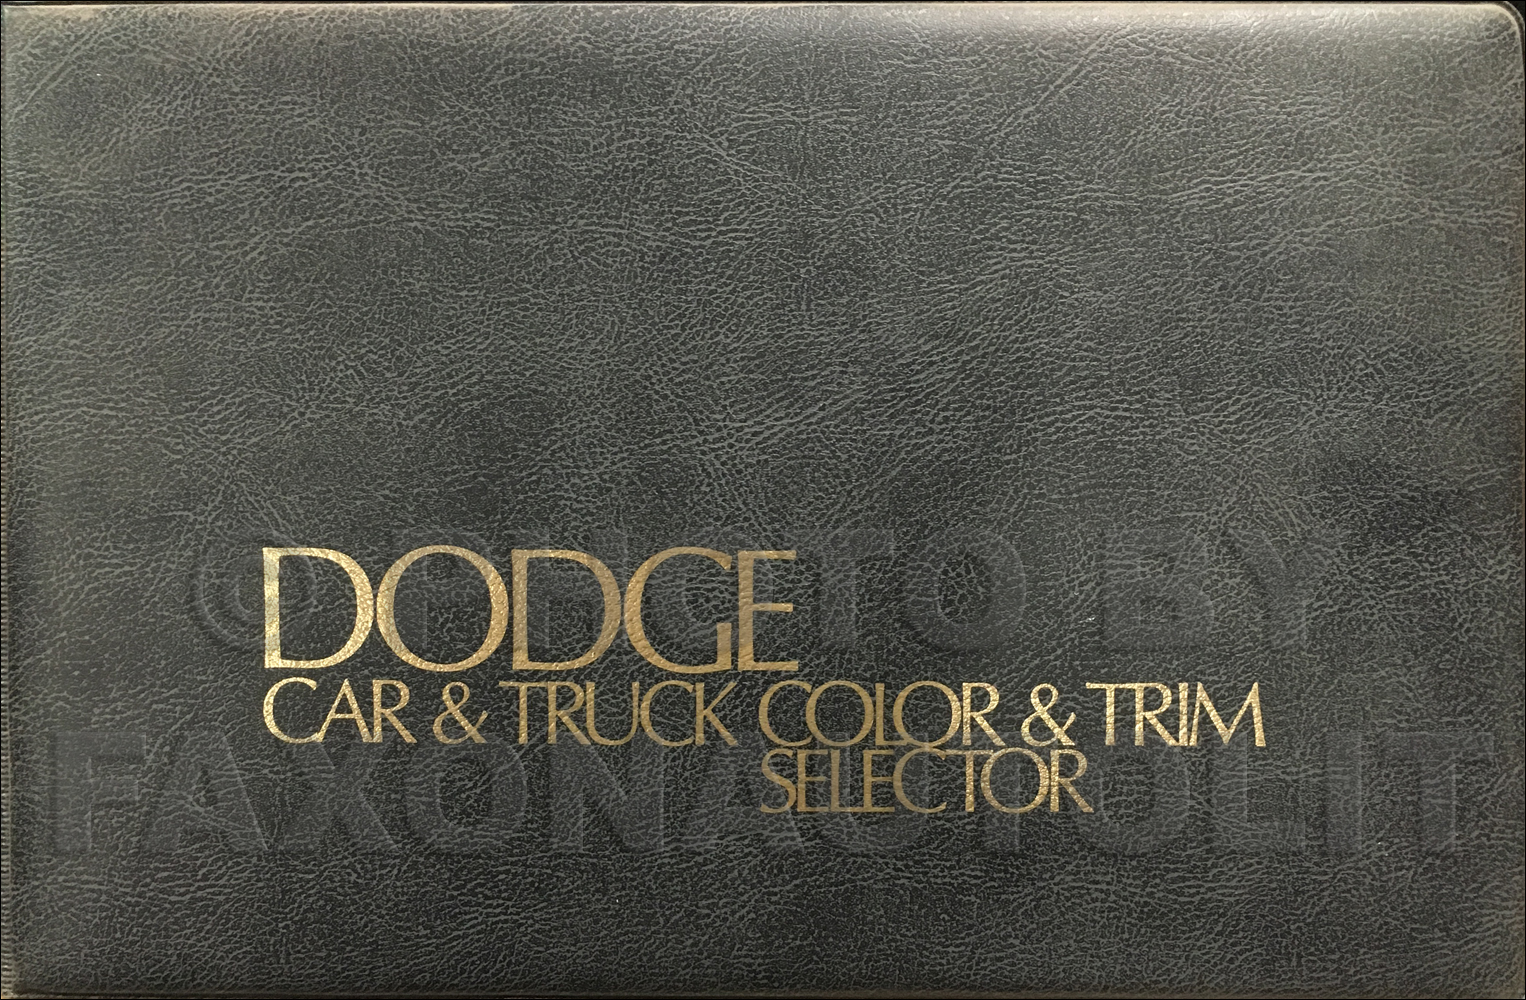 1975 Dodge Color & Upholstery Album Original